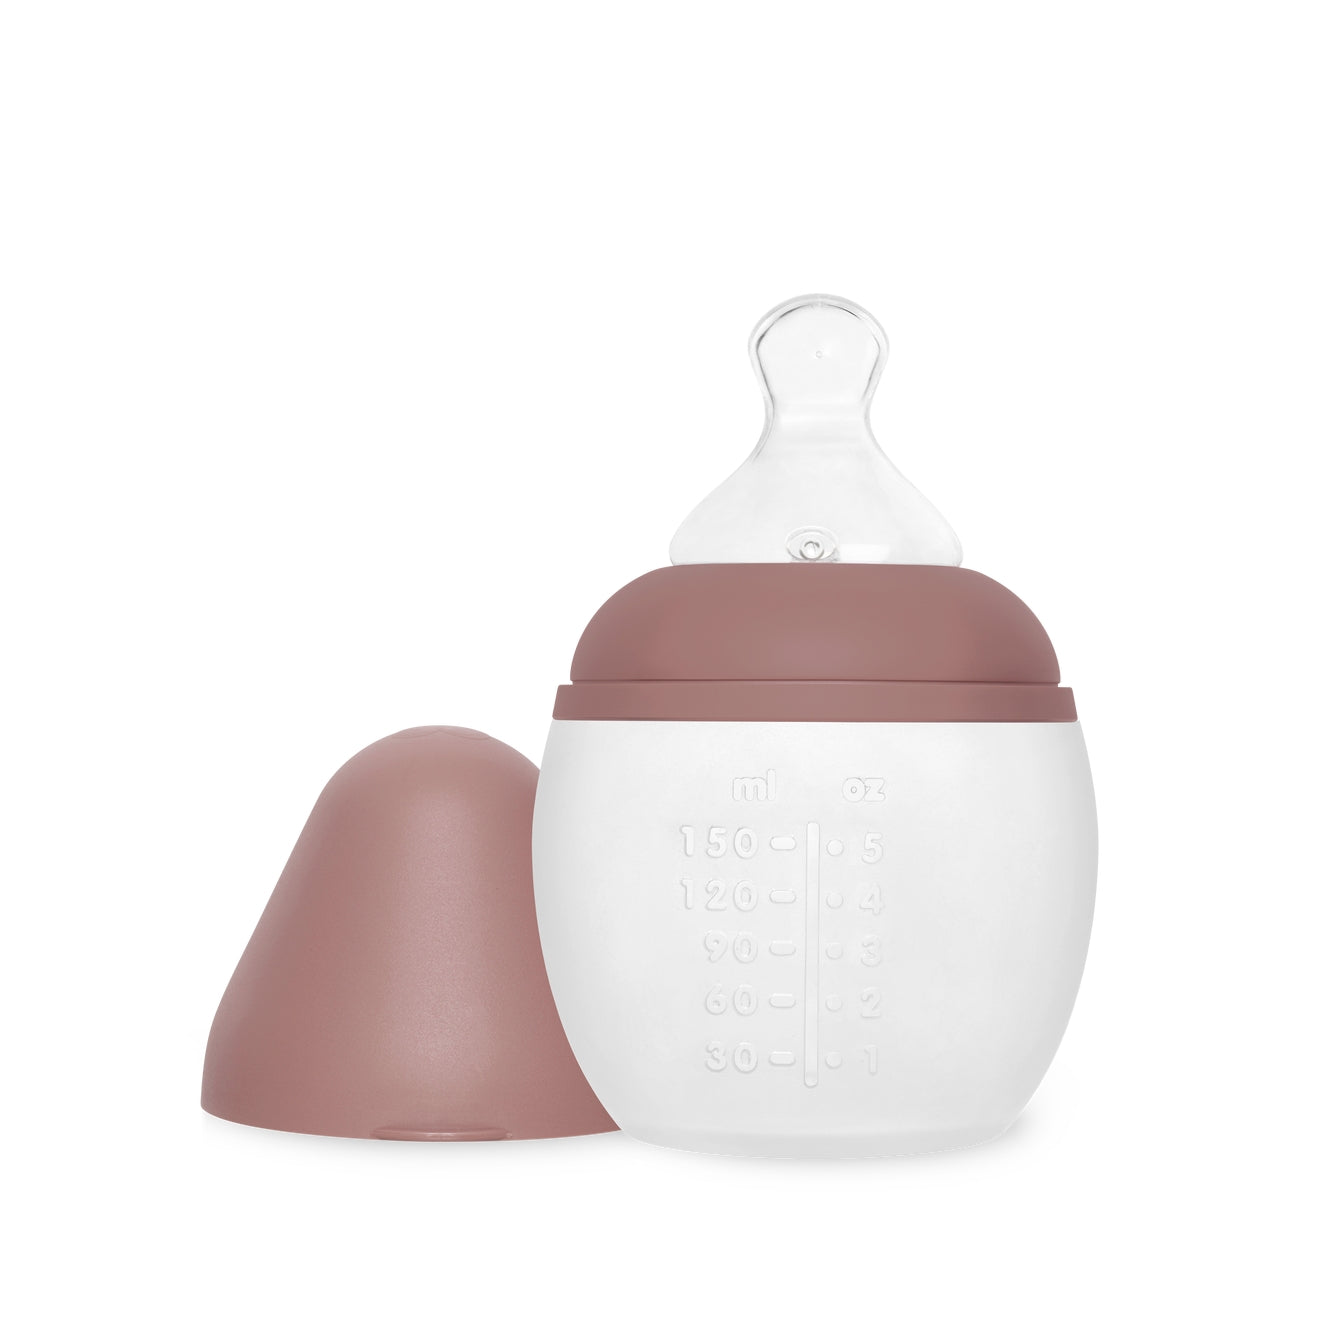 Baby bottle 150ml